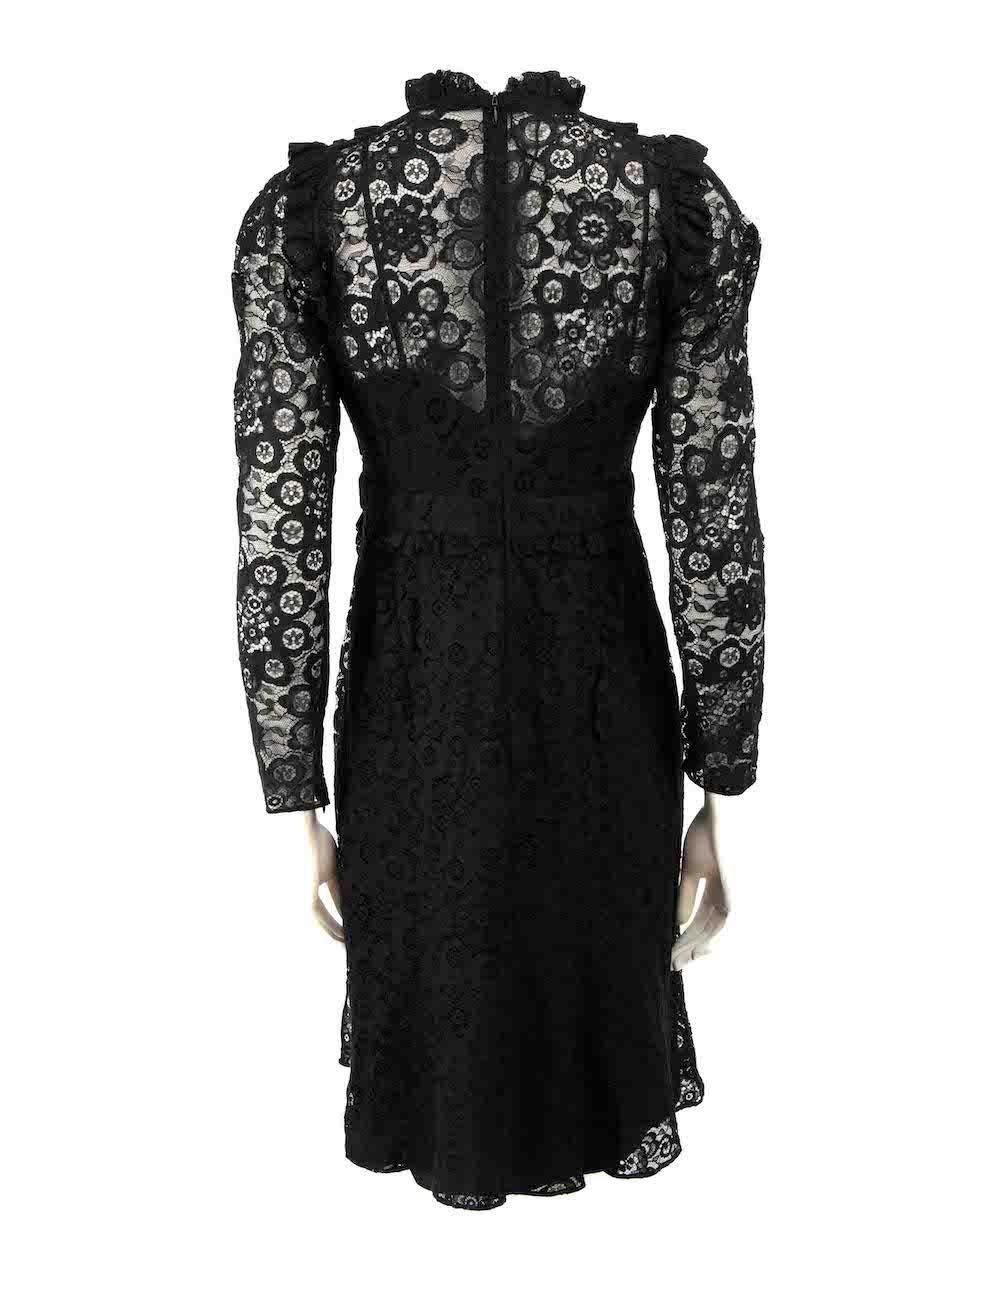 Altuzarra Black Lace Ruffle Trim Dress Size M In Excellent Condition For Sale In London, GB